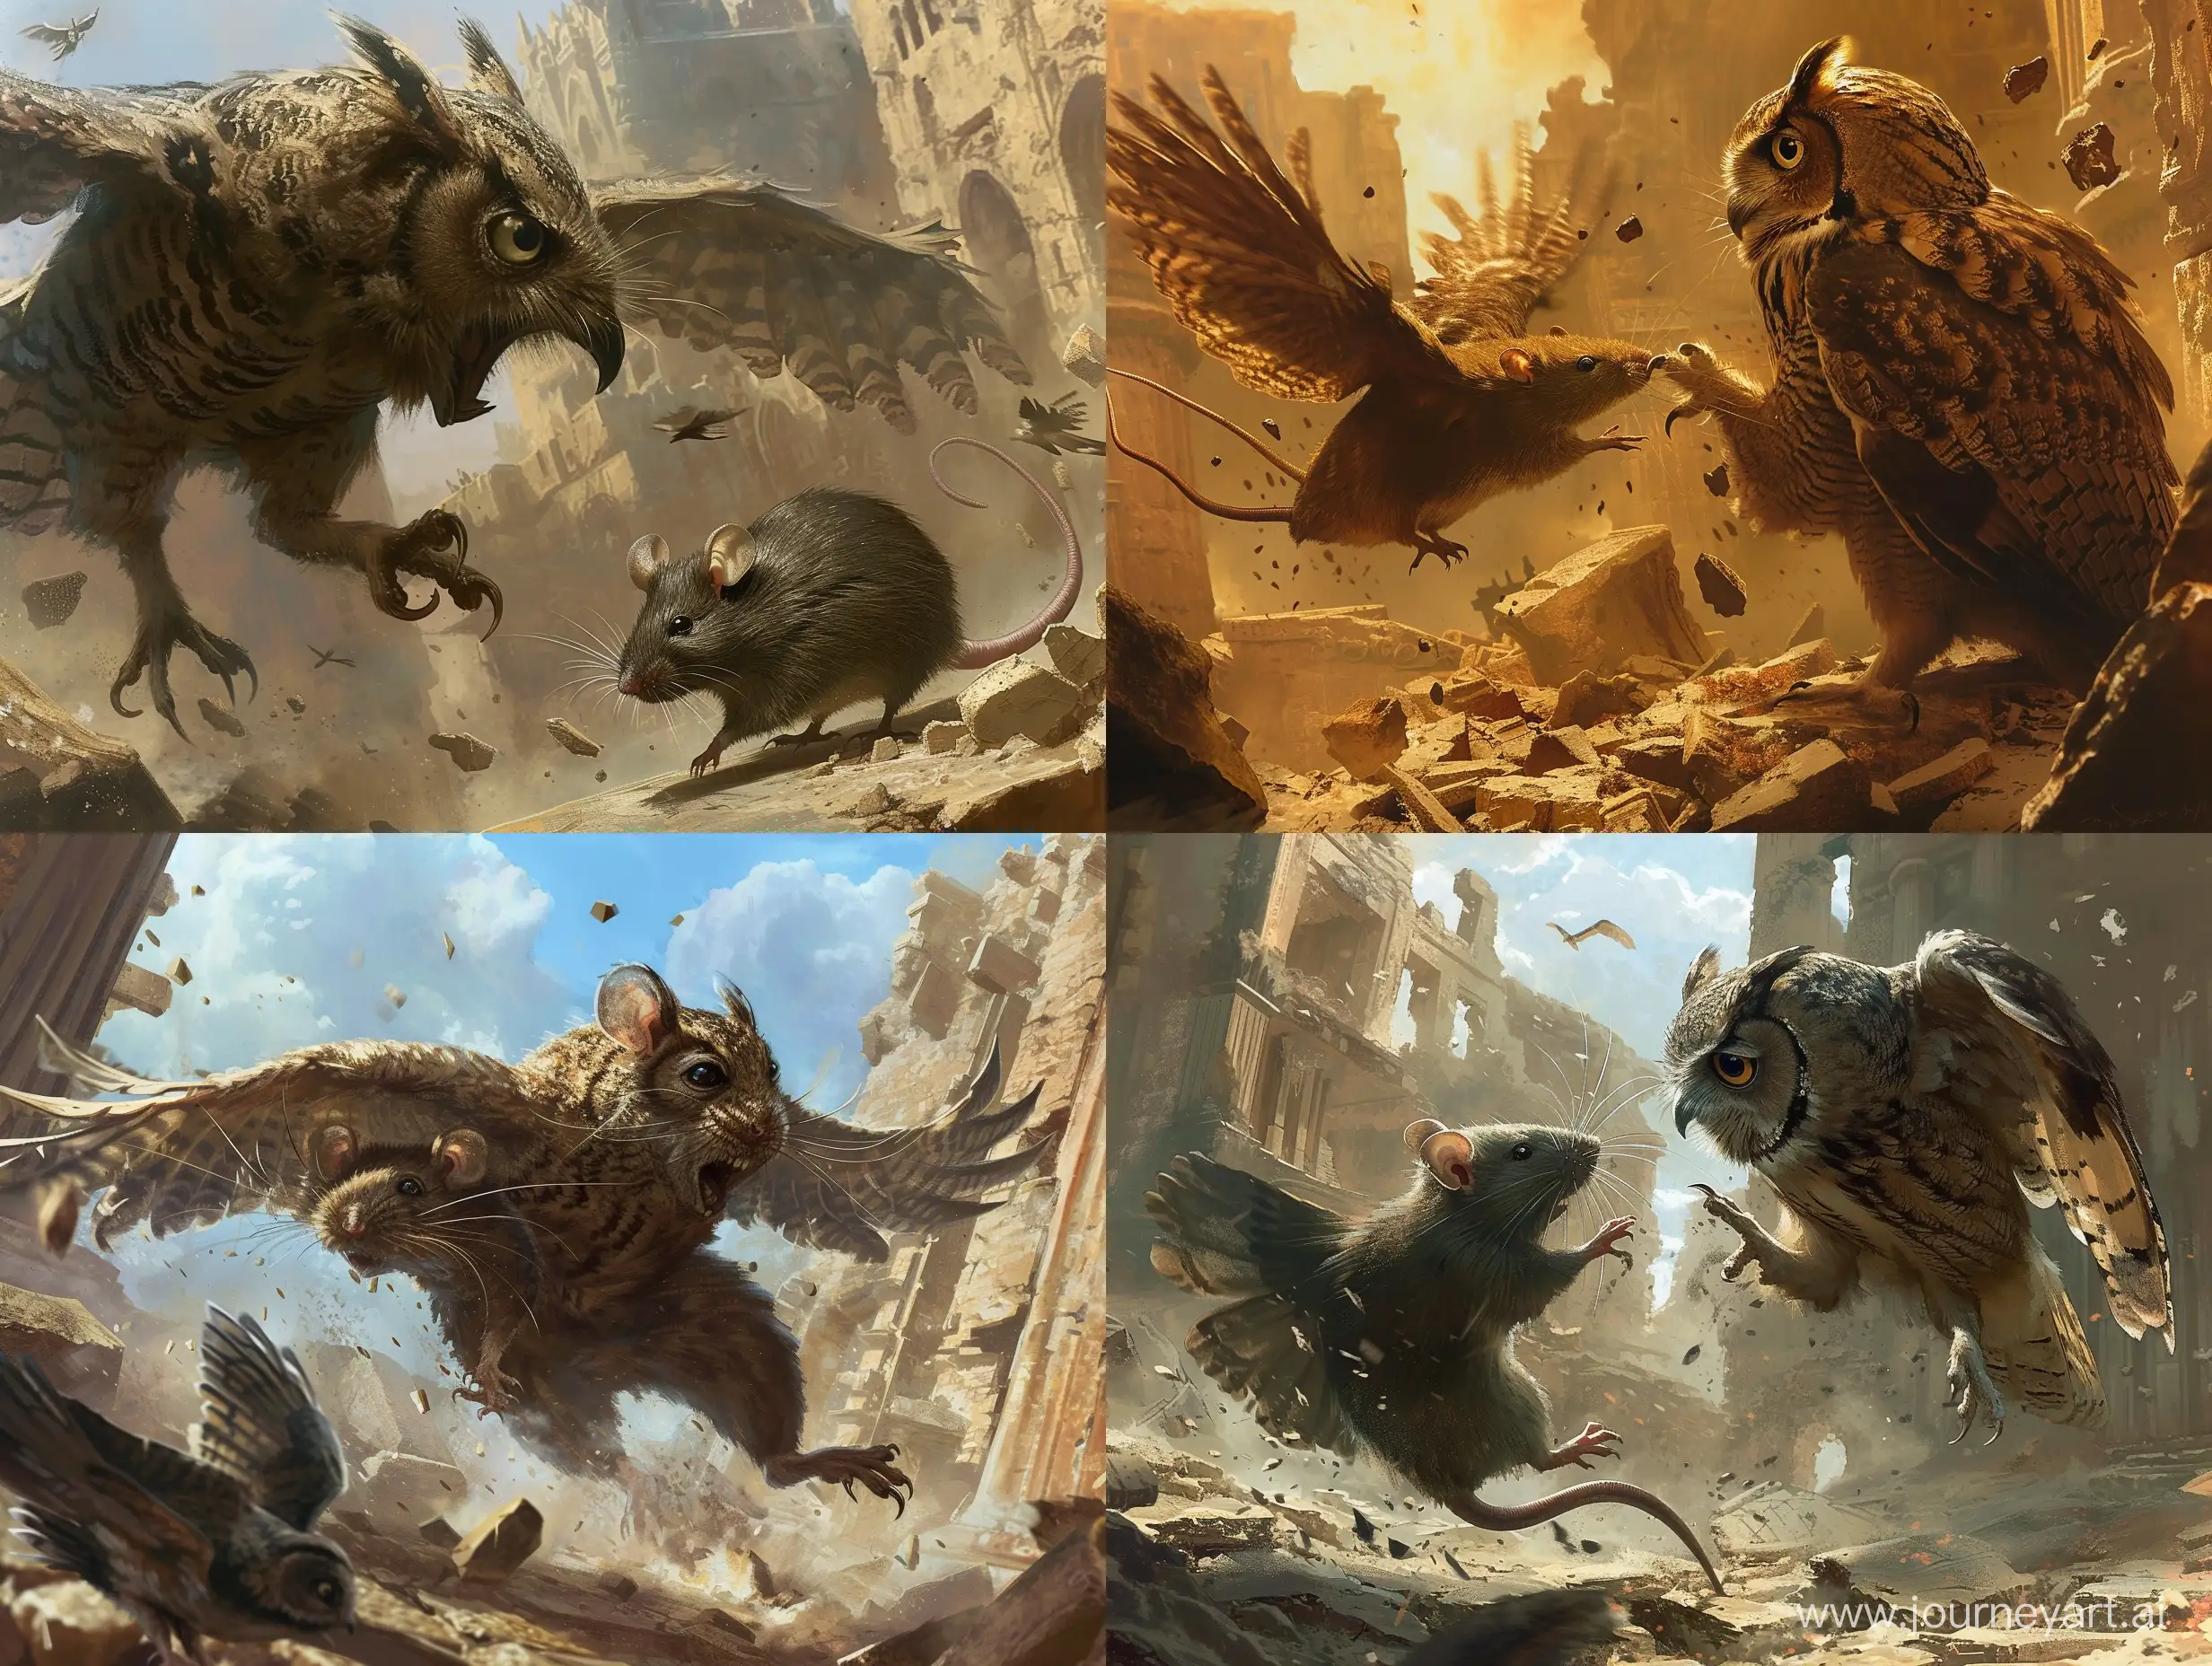 Epic-Battle-Scene-BattleWorn-Rat-and-Owl-Defending-Ancient-City-Ruins